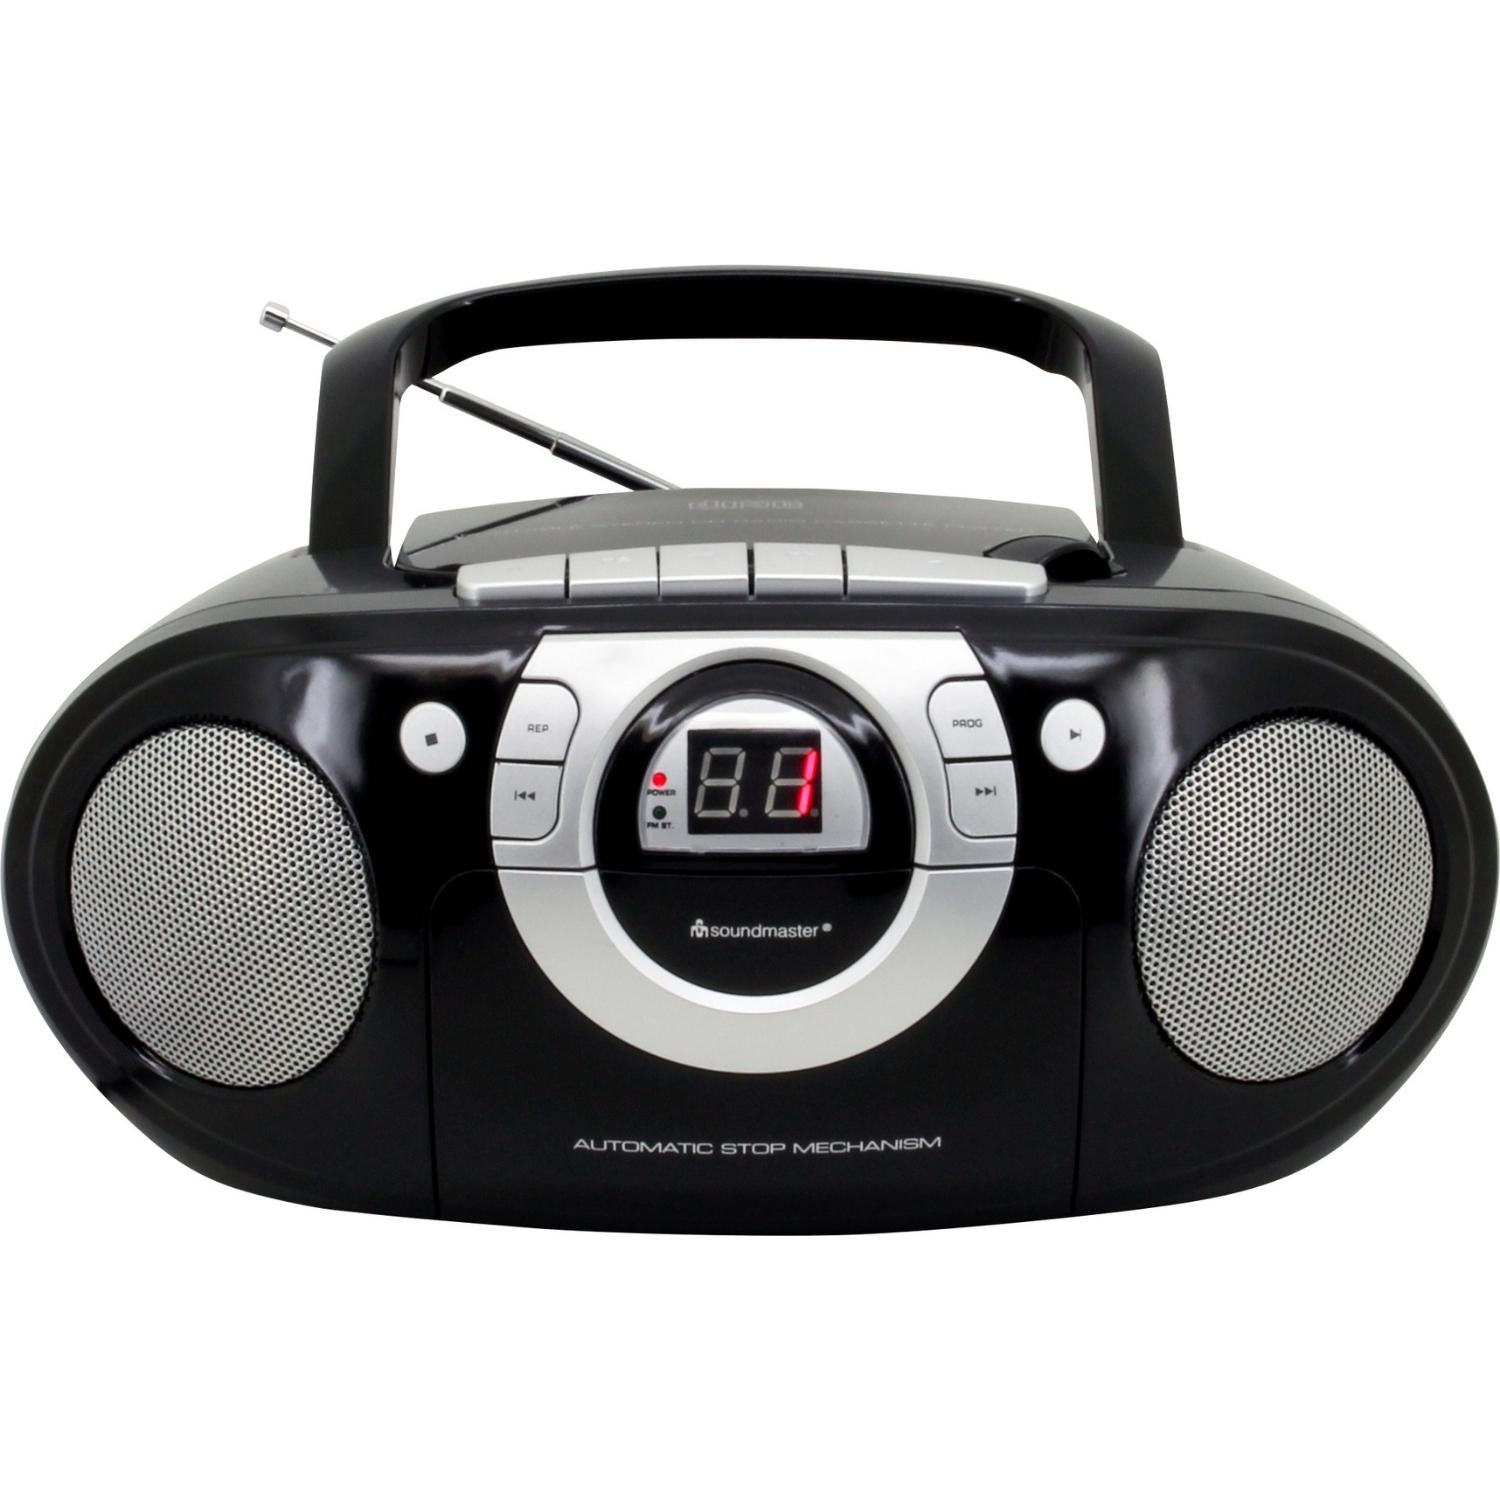 Soundmaster SCD5100SW radio portable CD player cassette recorder radio recorder